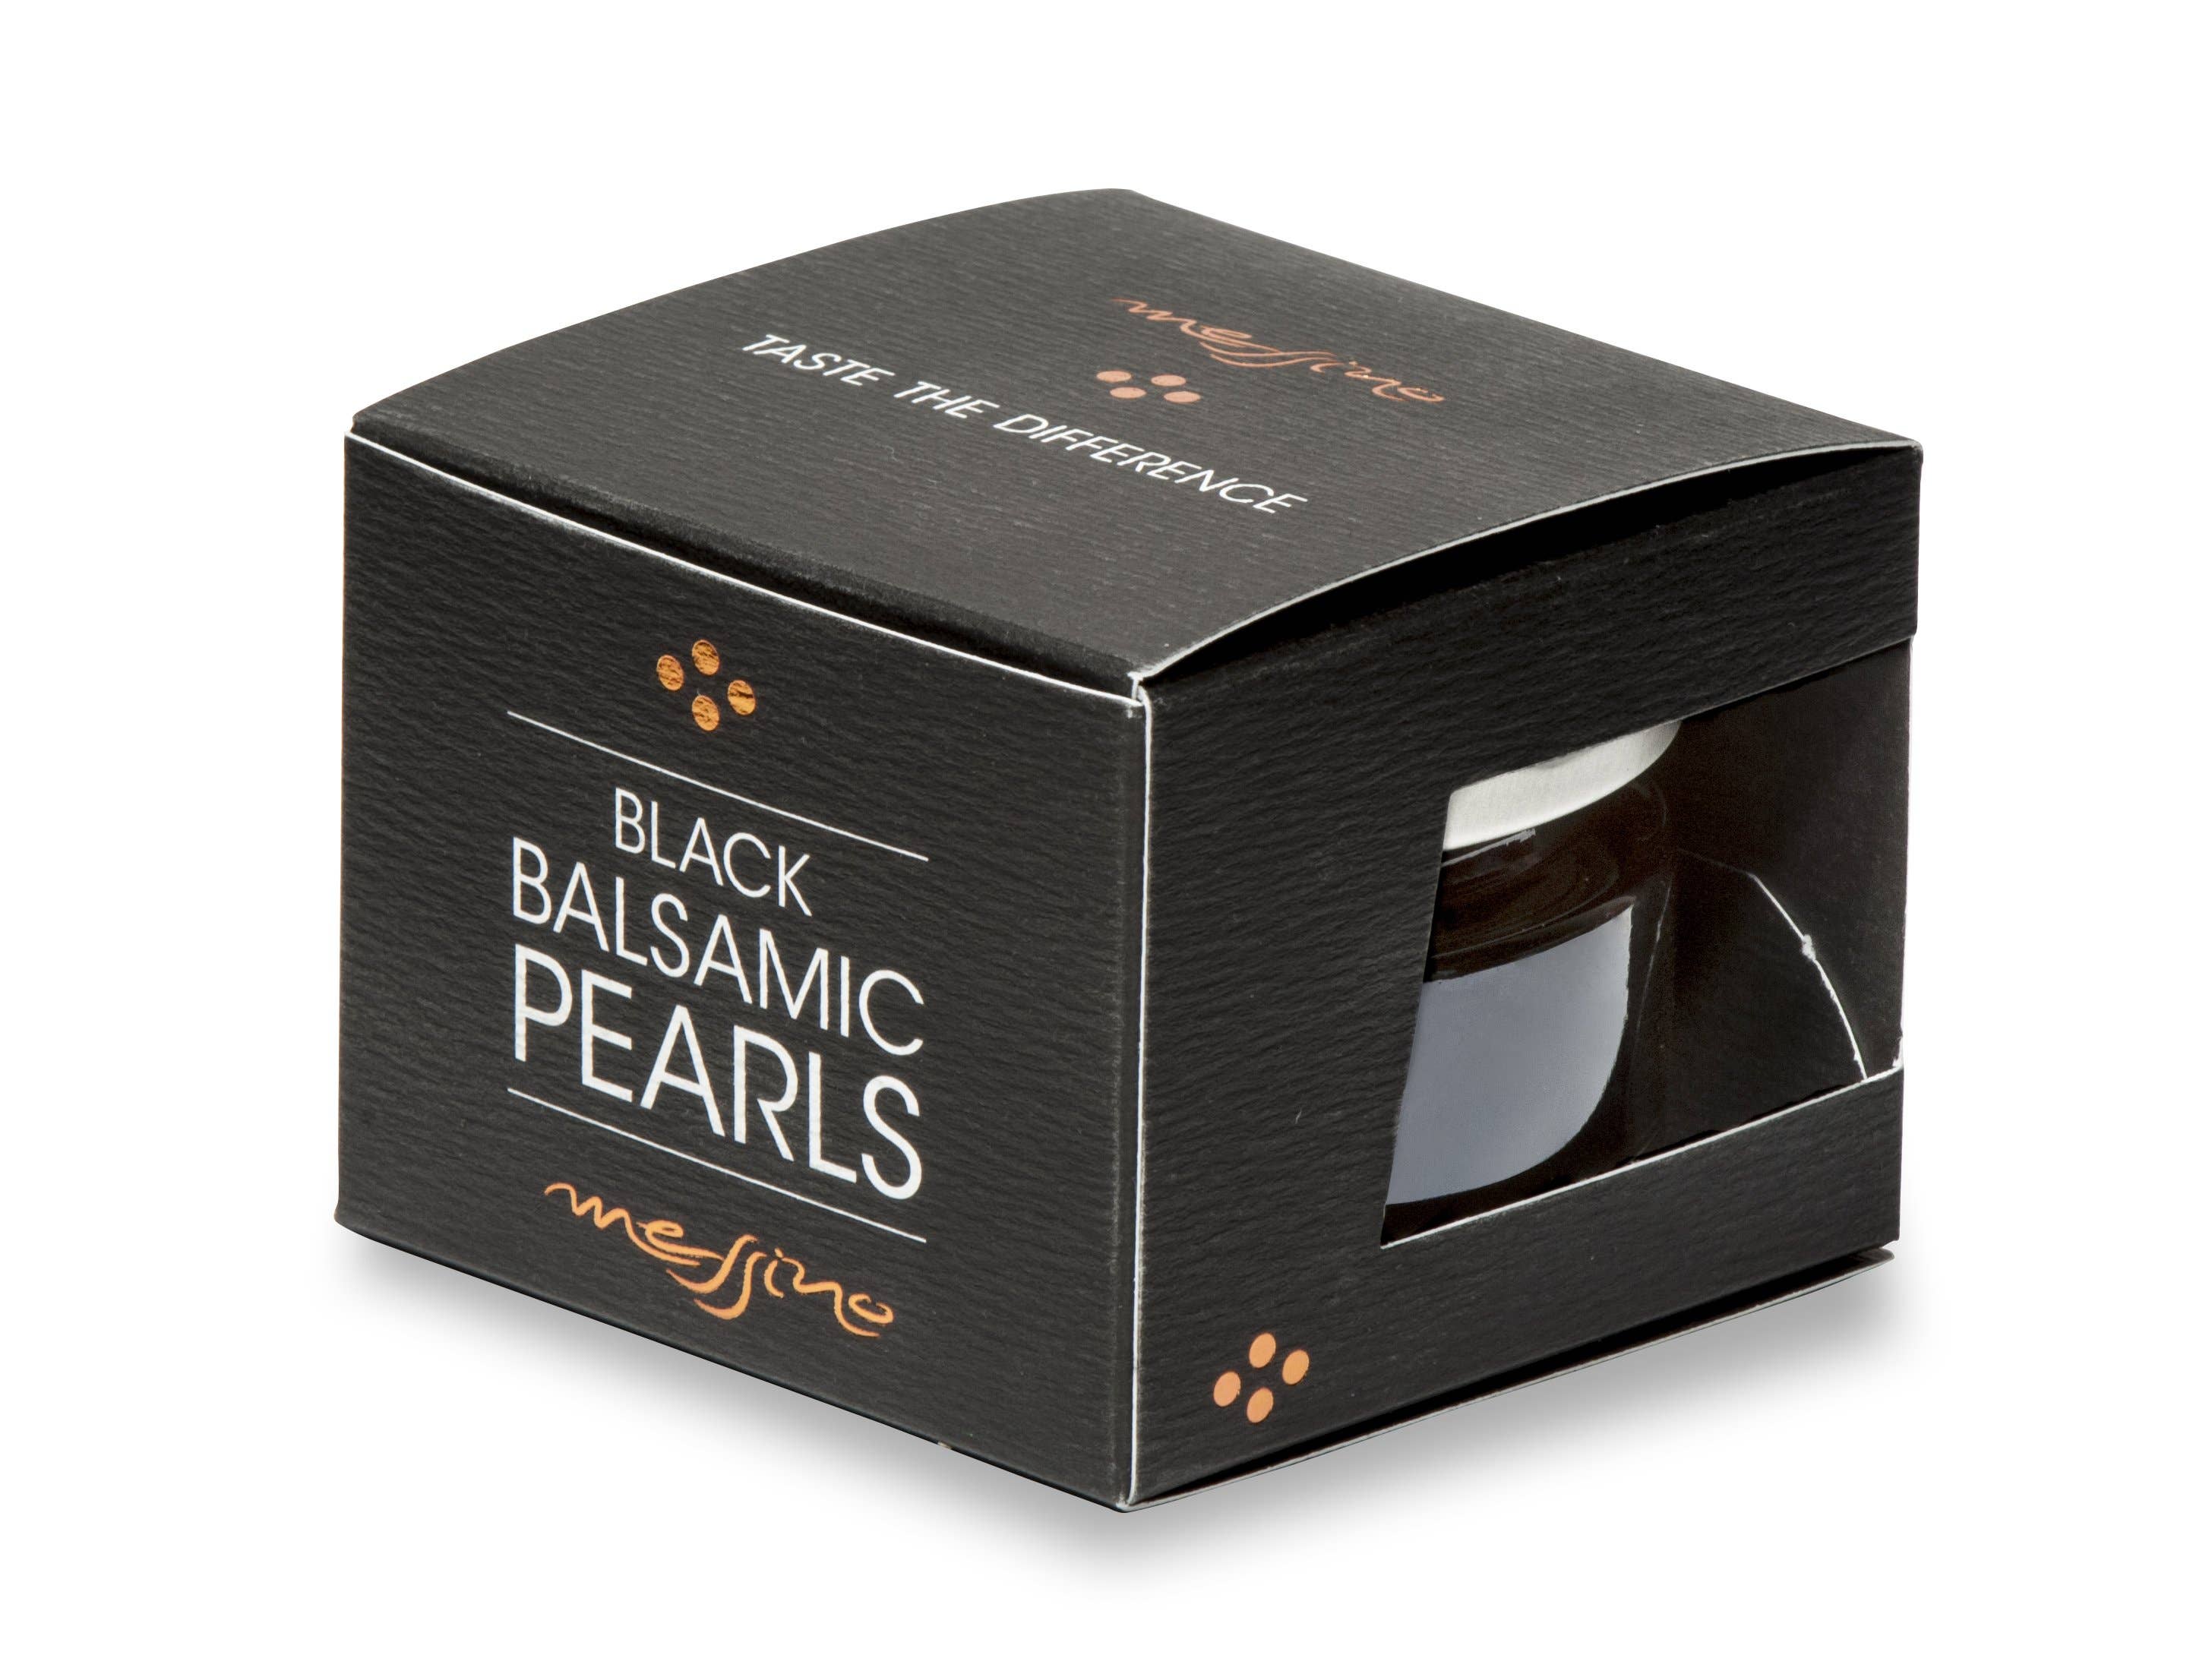 Messino Black Balsamic Pearls